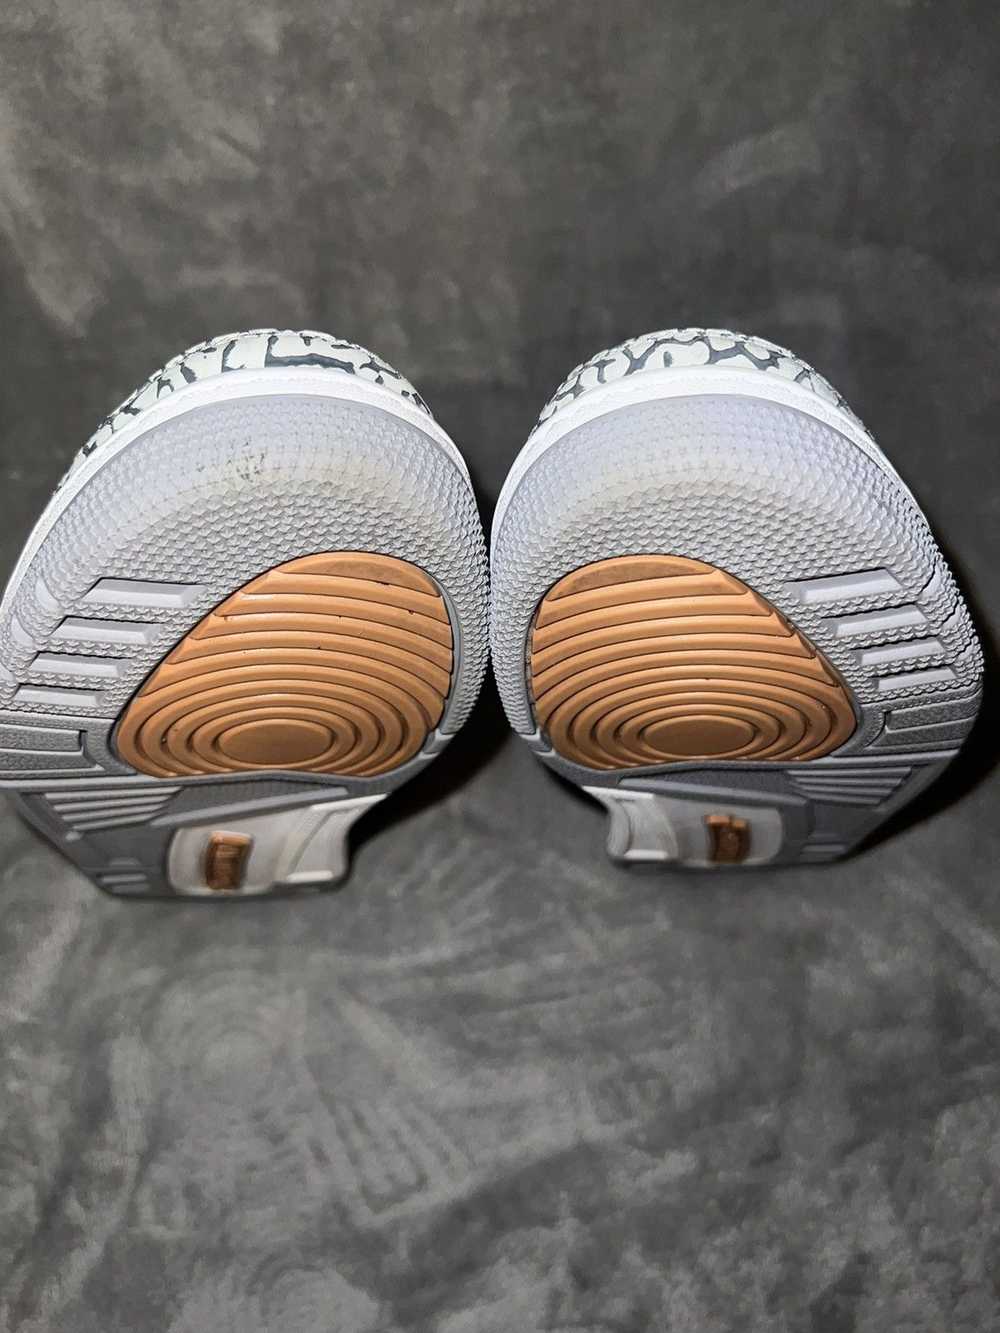 Jordan Brand × Nike Jordan 3 “Wizards” - image 8